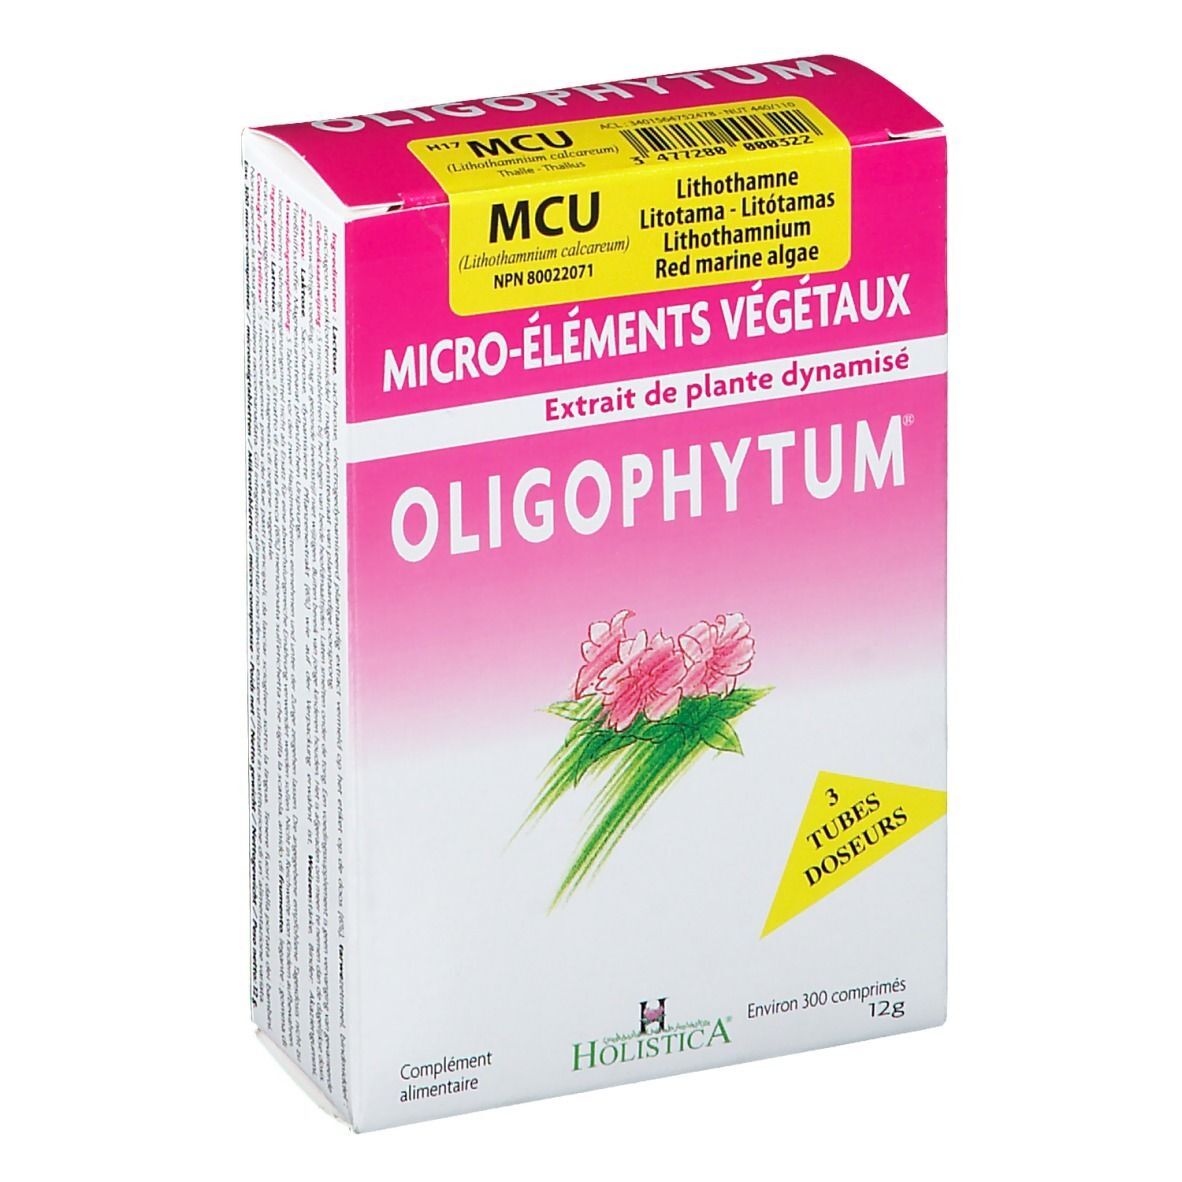 BIOHOLISTIC DIFFUSION Oligophytum® Lithium